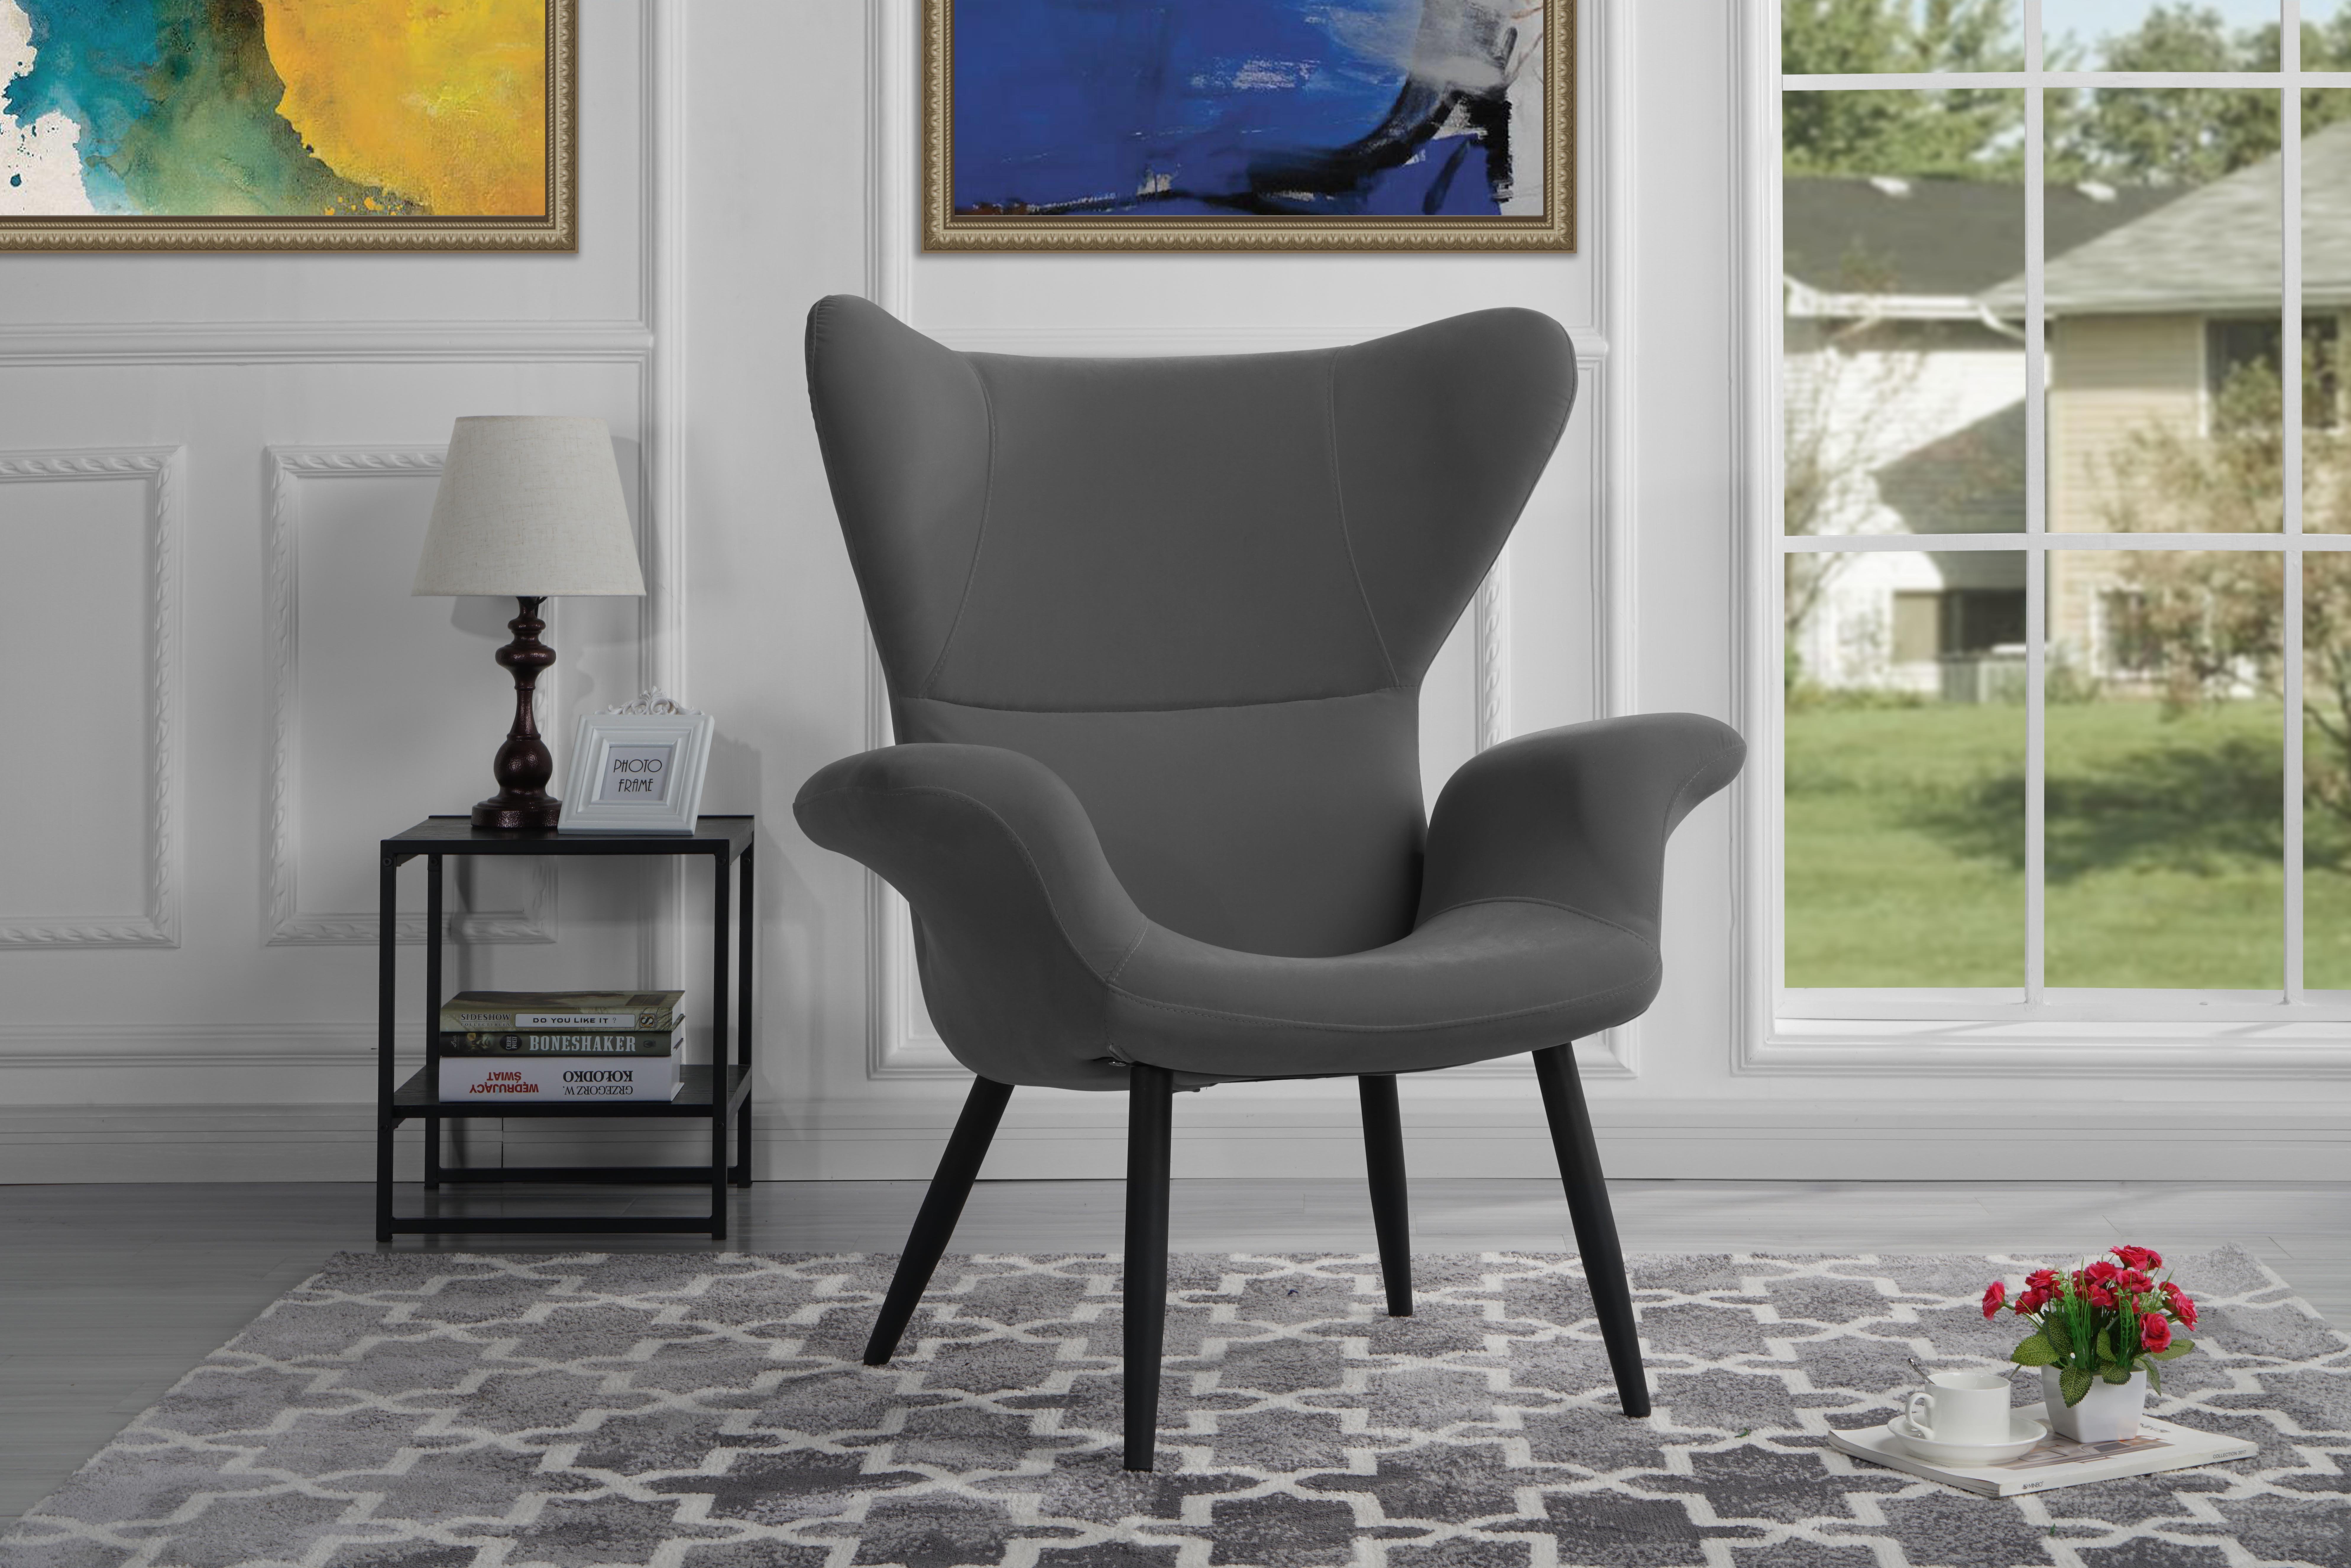 Belleze Accent Chair Armchair Living Room